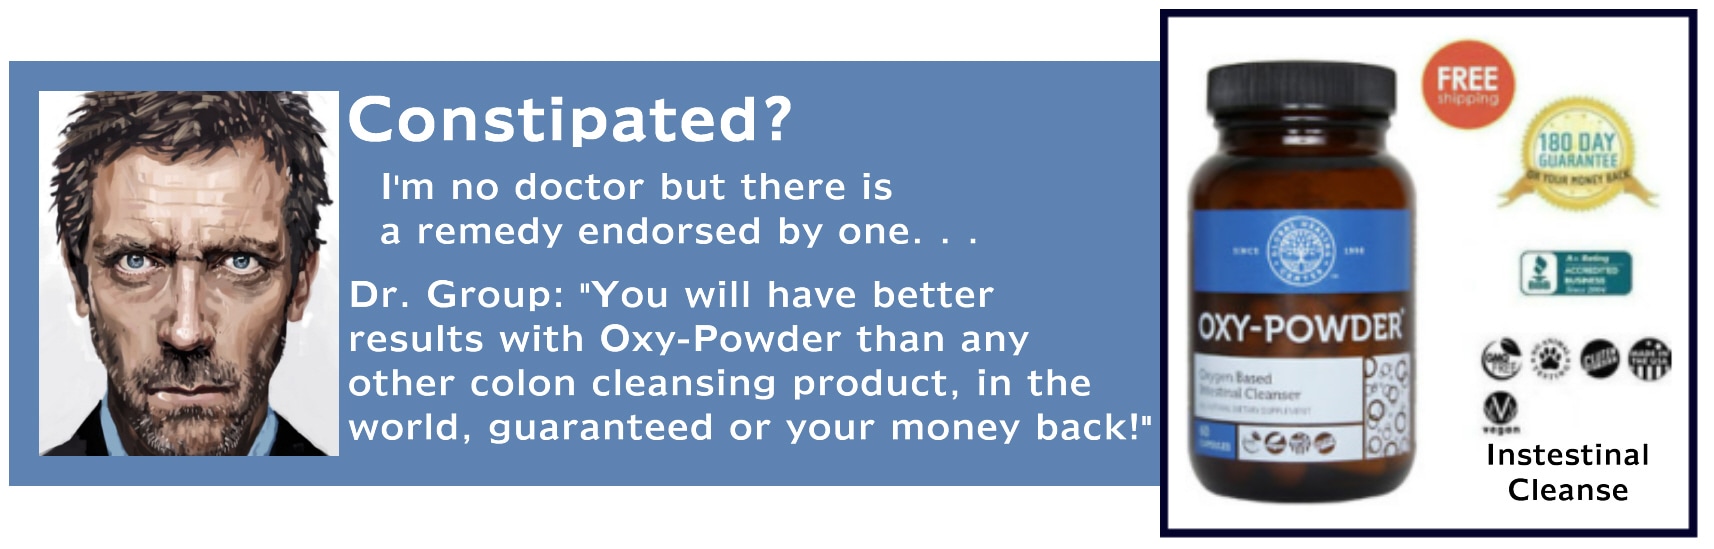 Constipation Intestinal Cleanse OxyPowder